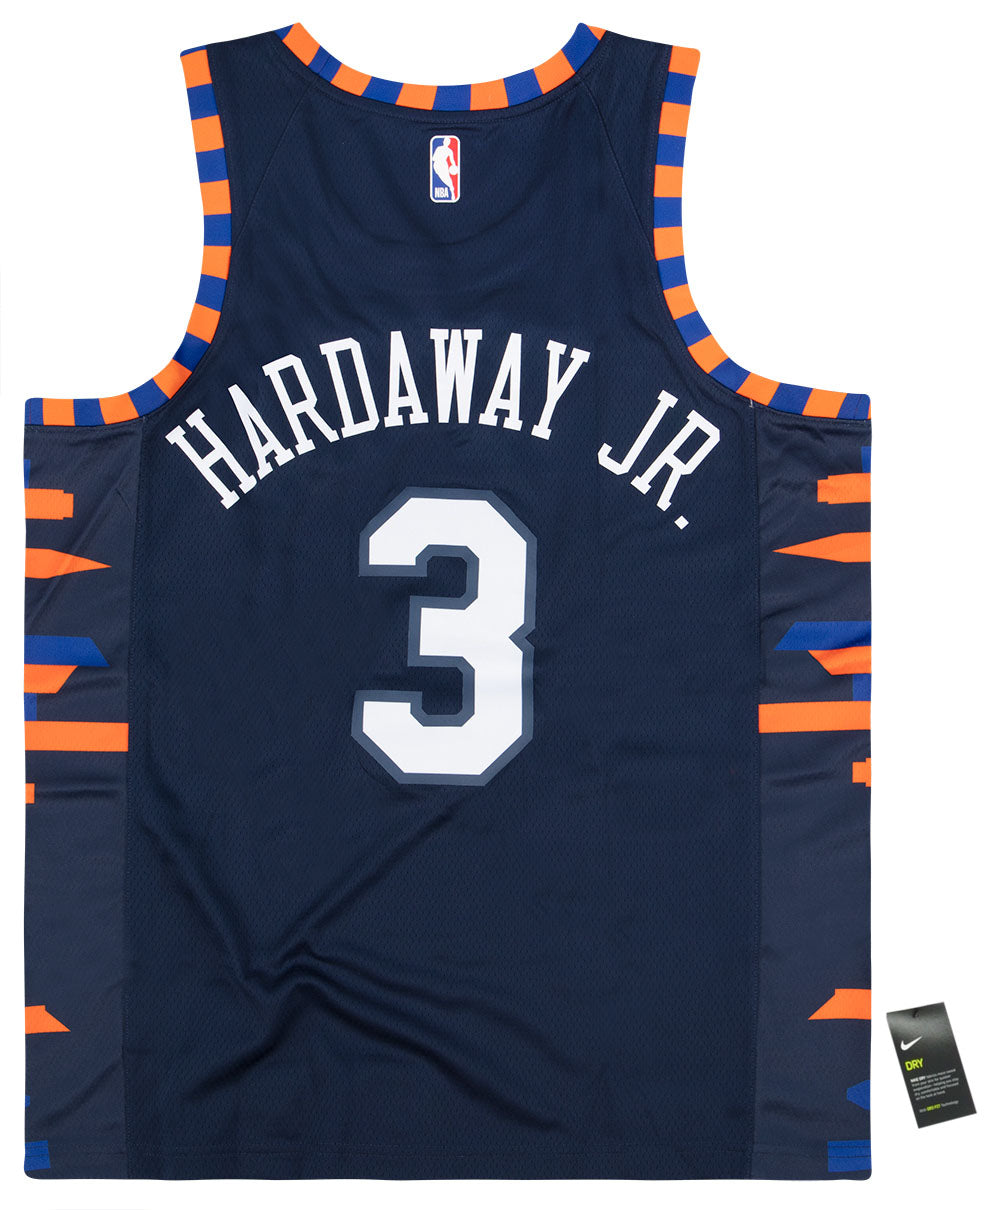 Mens New York Knicks Tim Hardaway Jr #3 White Assoc Jersey Swingman S Nike  at 's Sports Collectibles Store